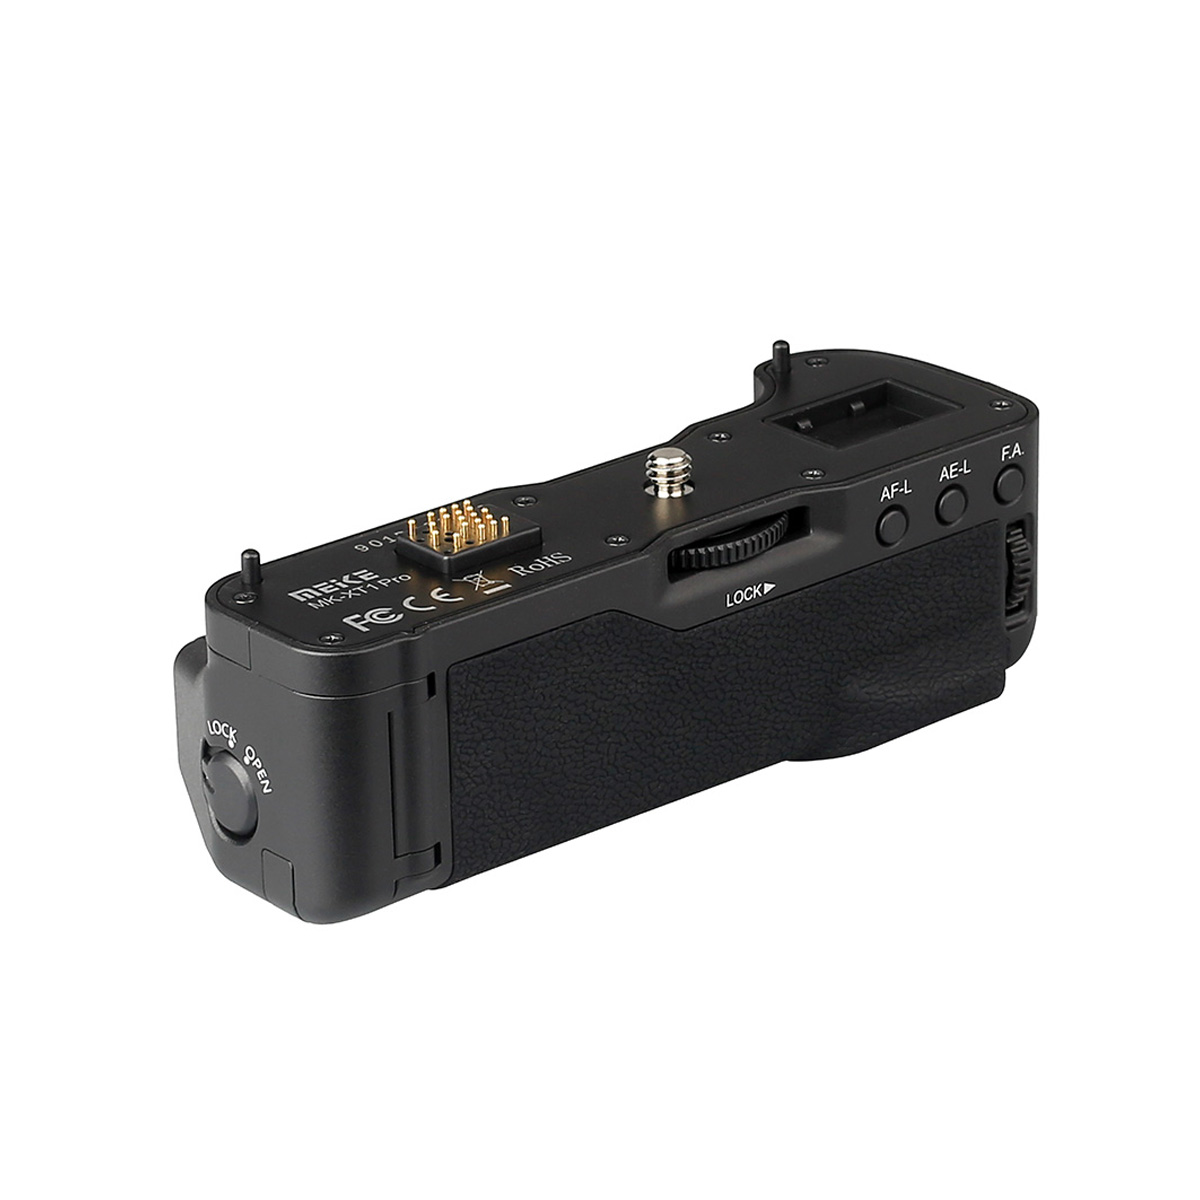 Battery Grip Meike MK-D500 for Nikon D500